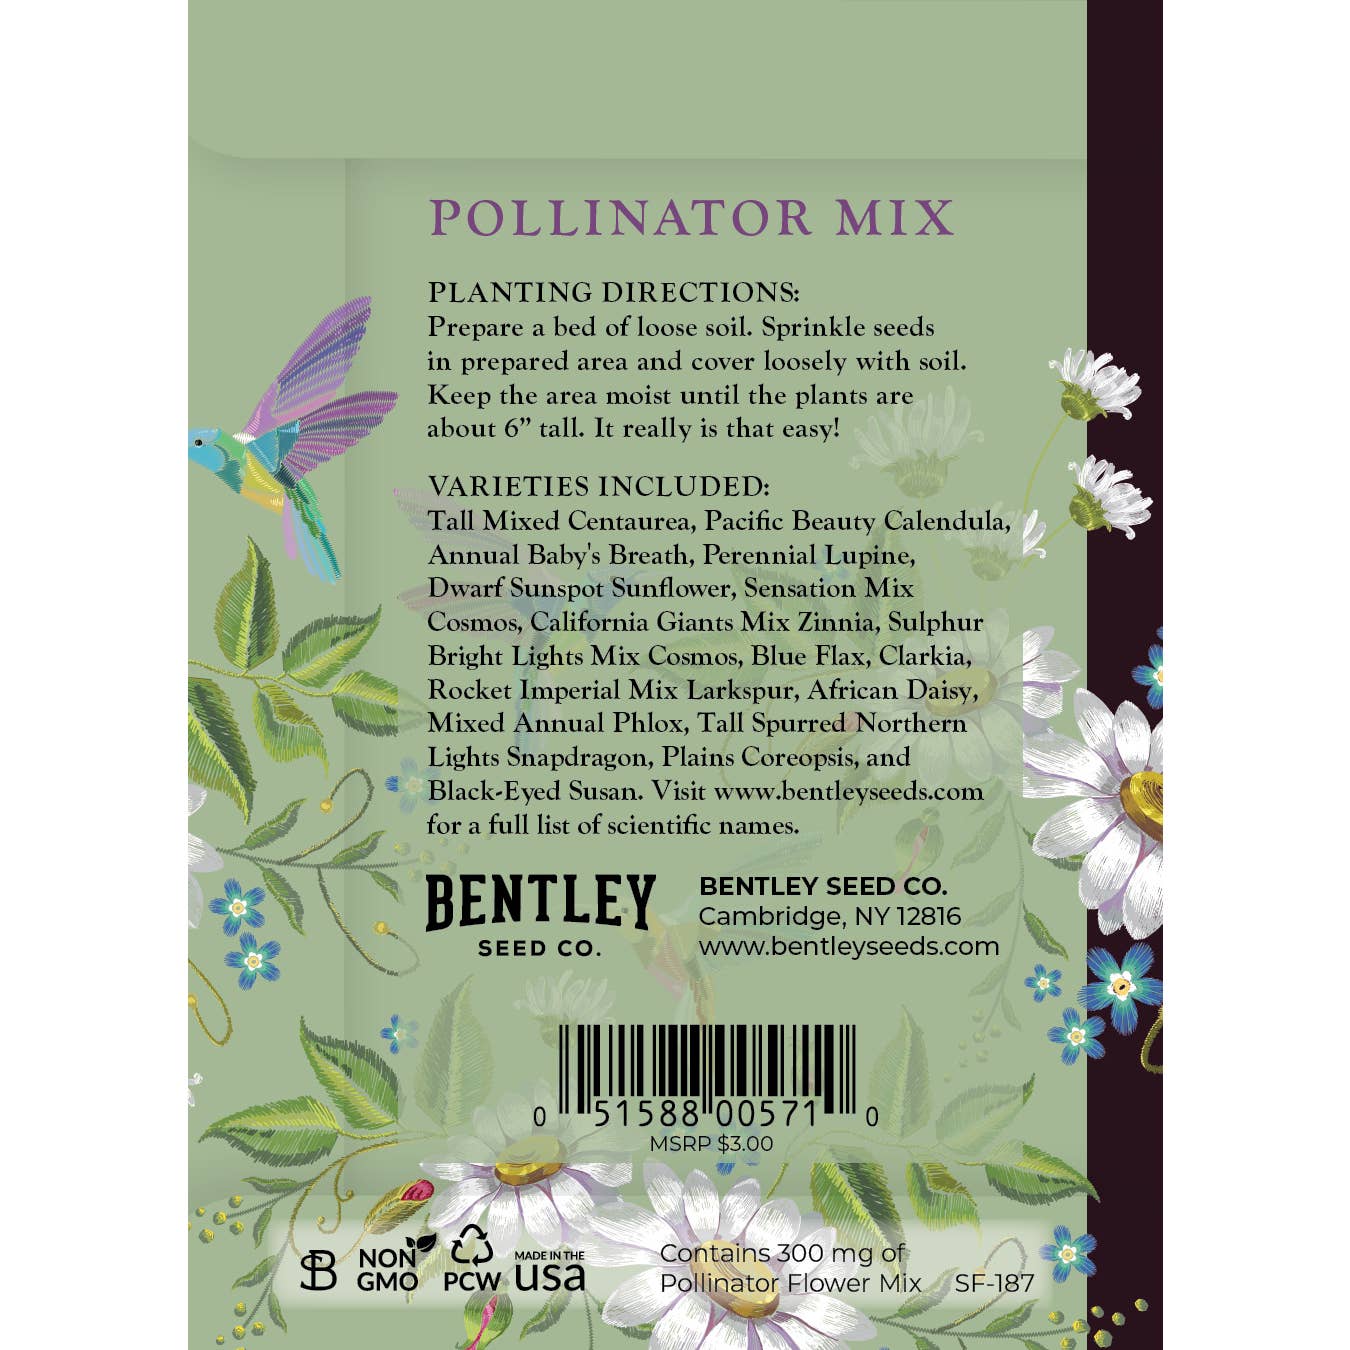 Help Hummingbirds - Pollinator Wildflower Seed Packets